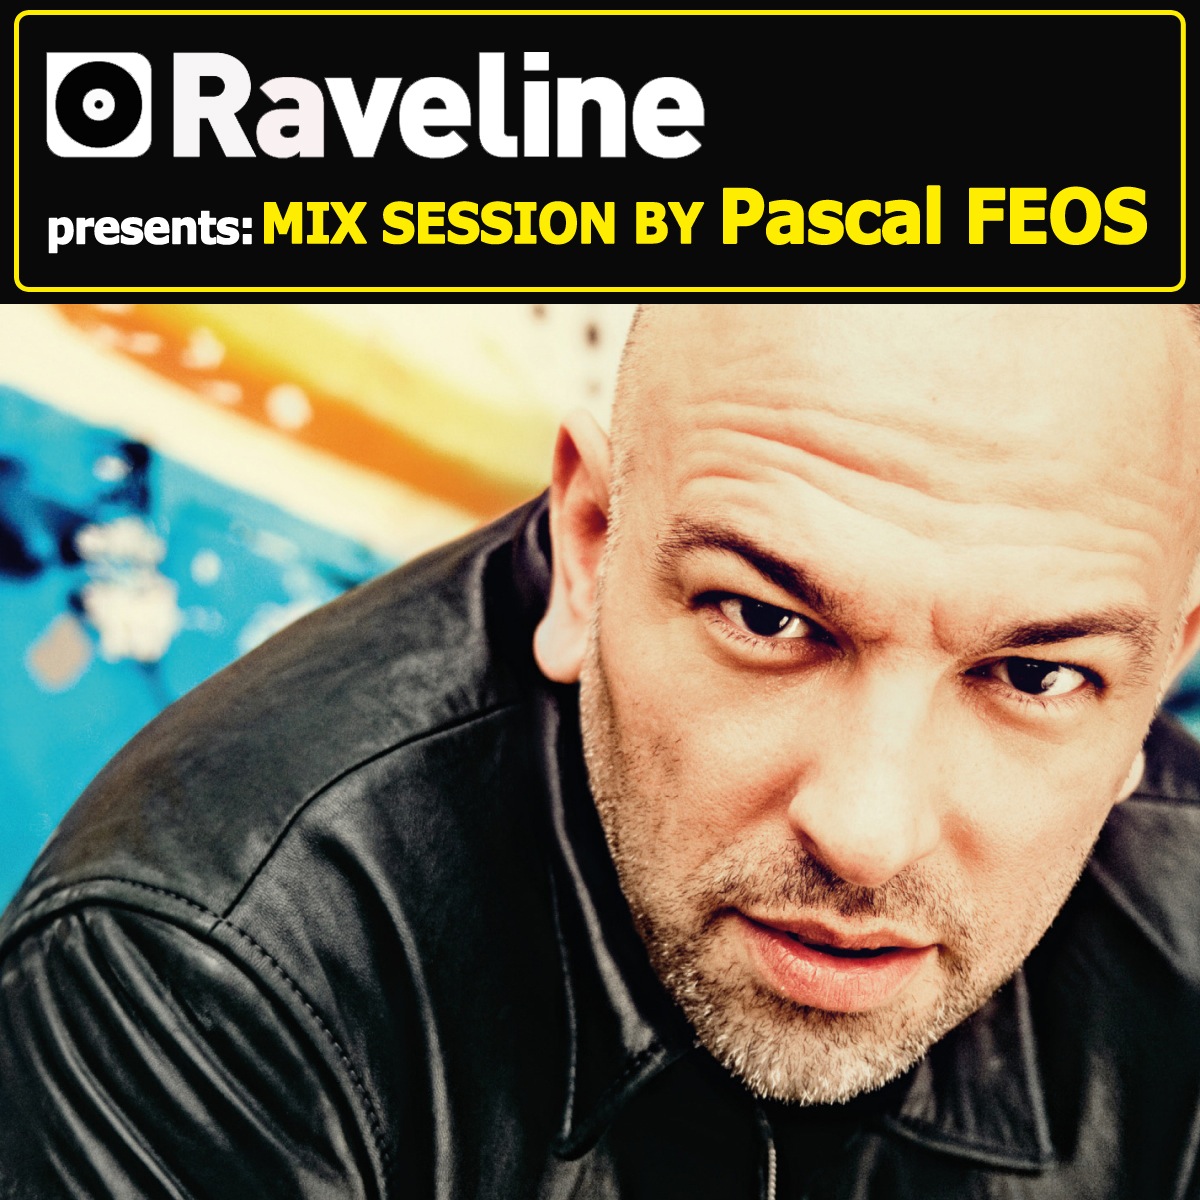 Raveline Mix Sessions 017 - DJ Mix